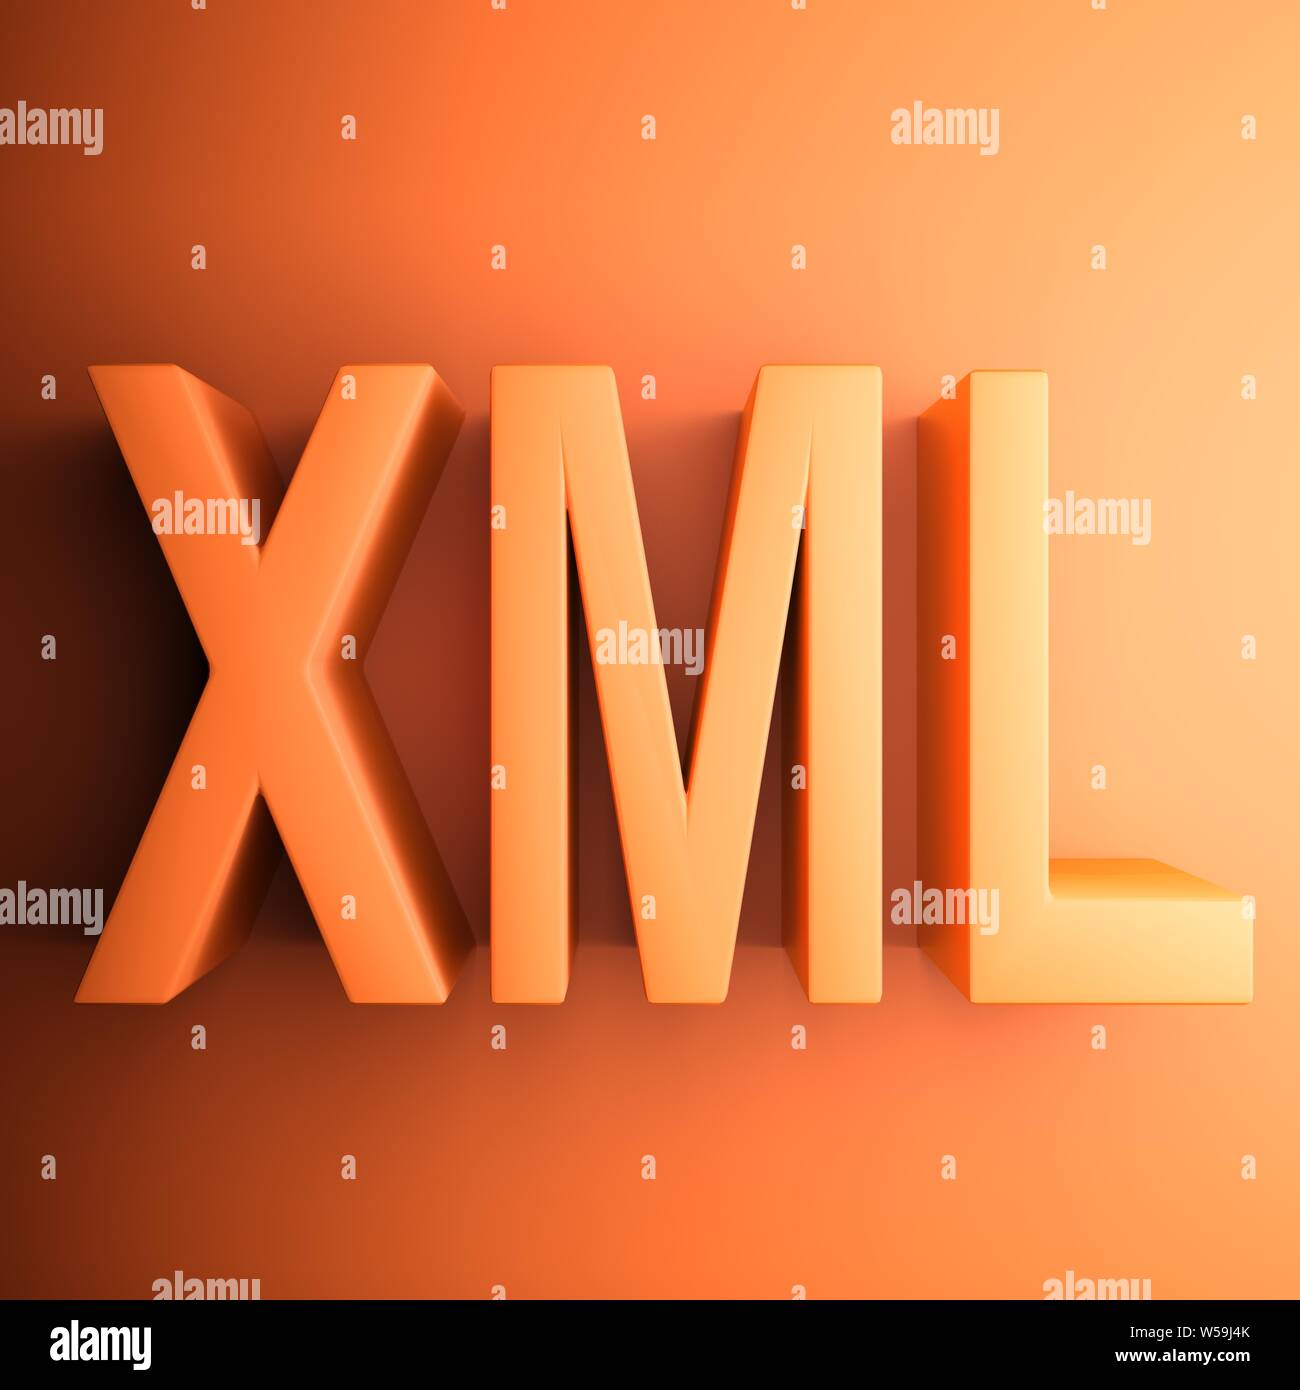 Orange square XML icon - 3D rendering illustration Stock Photo